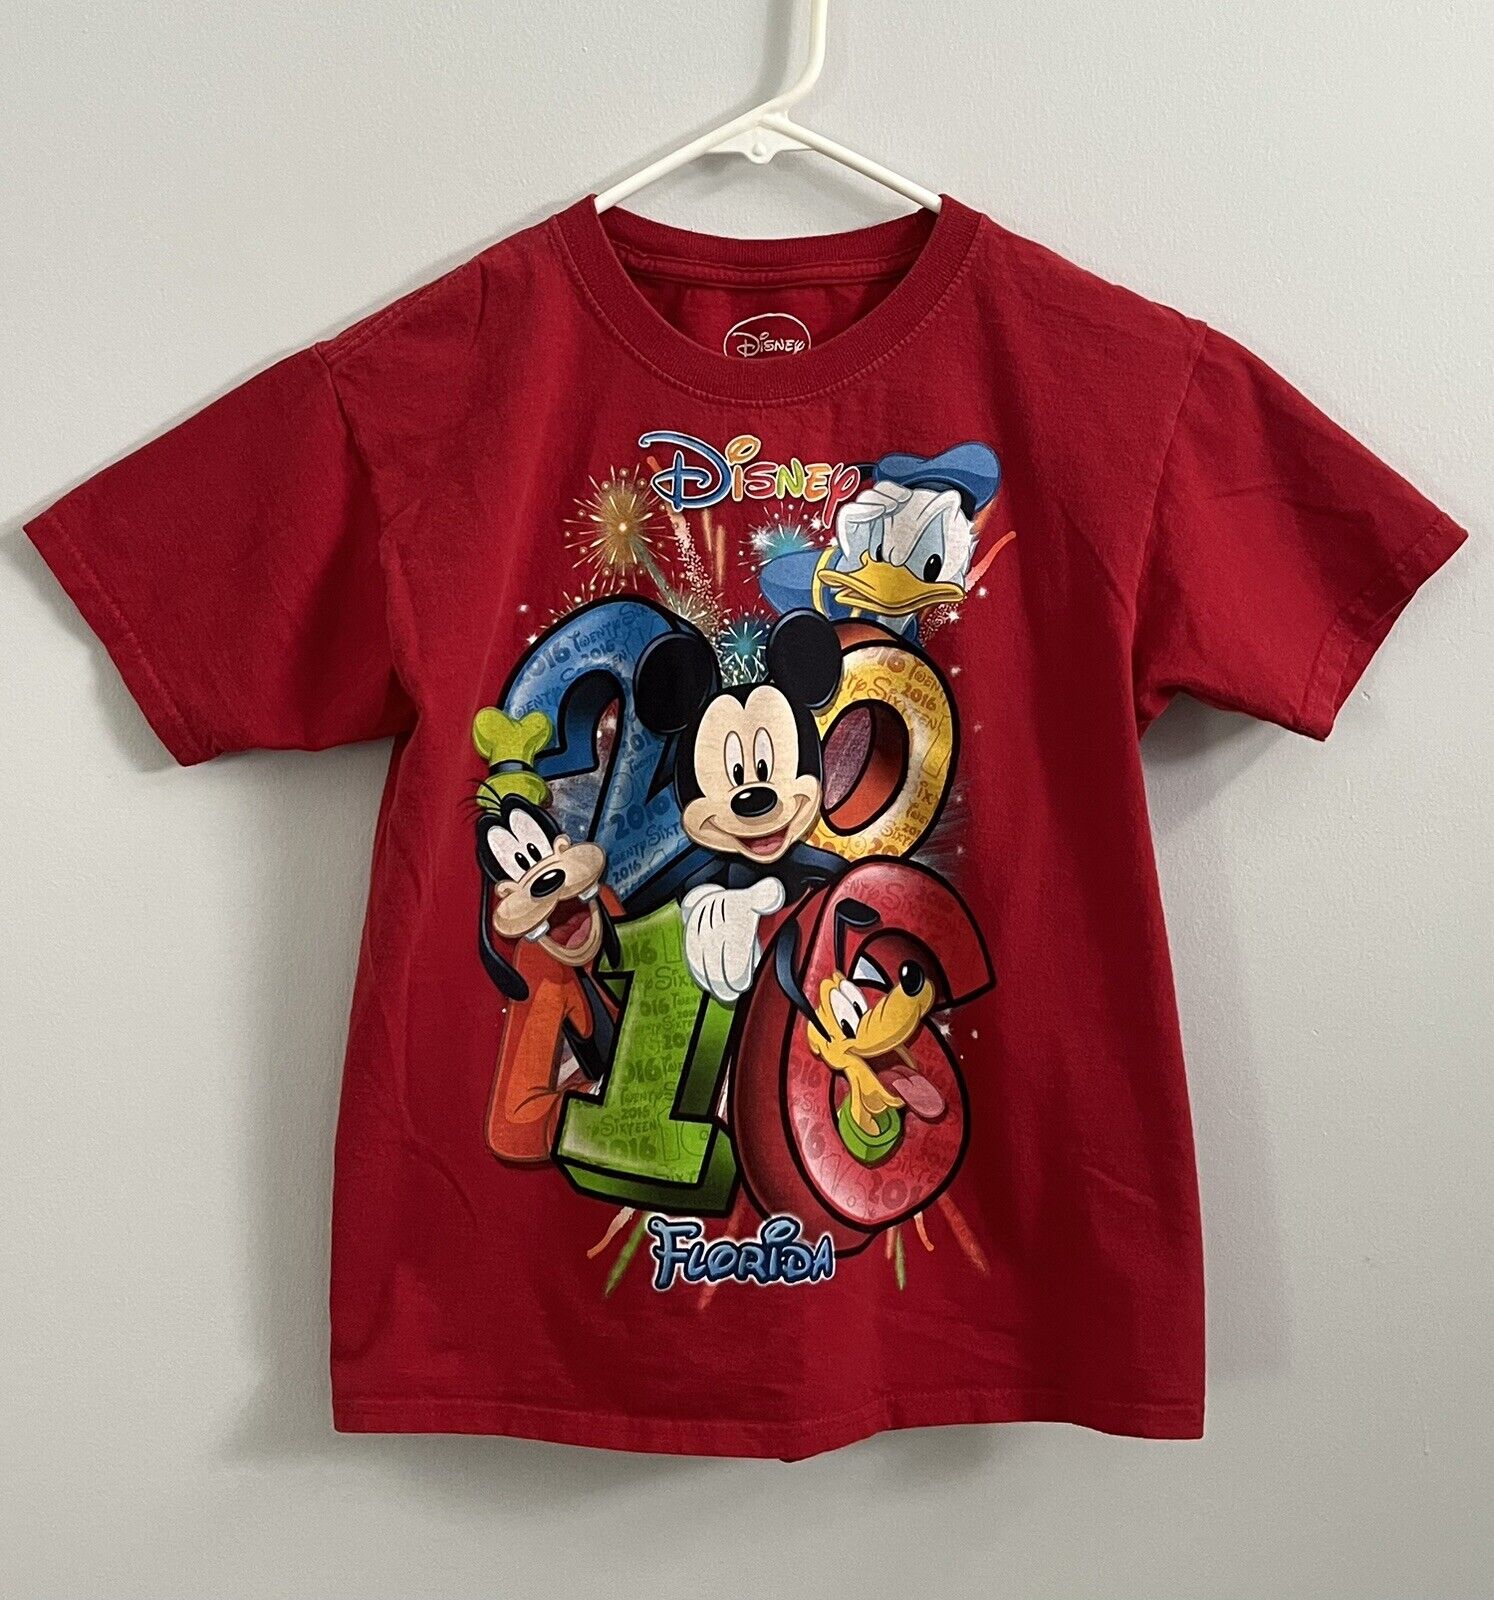 Disney Florida 2016 Boys Size 8 Medium T-Shirt Graphic Top Red